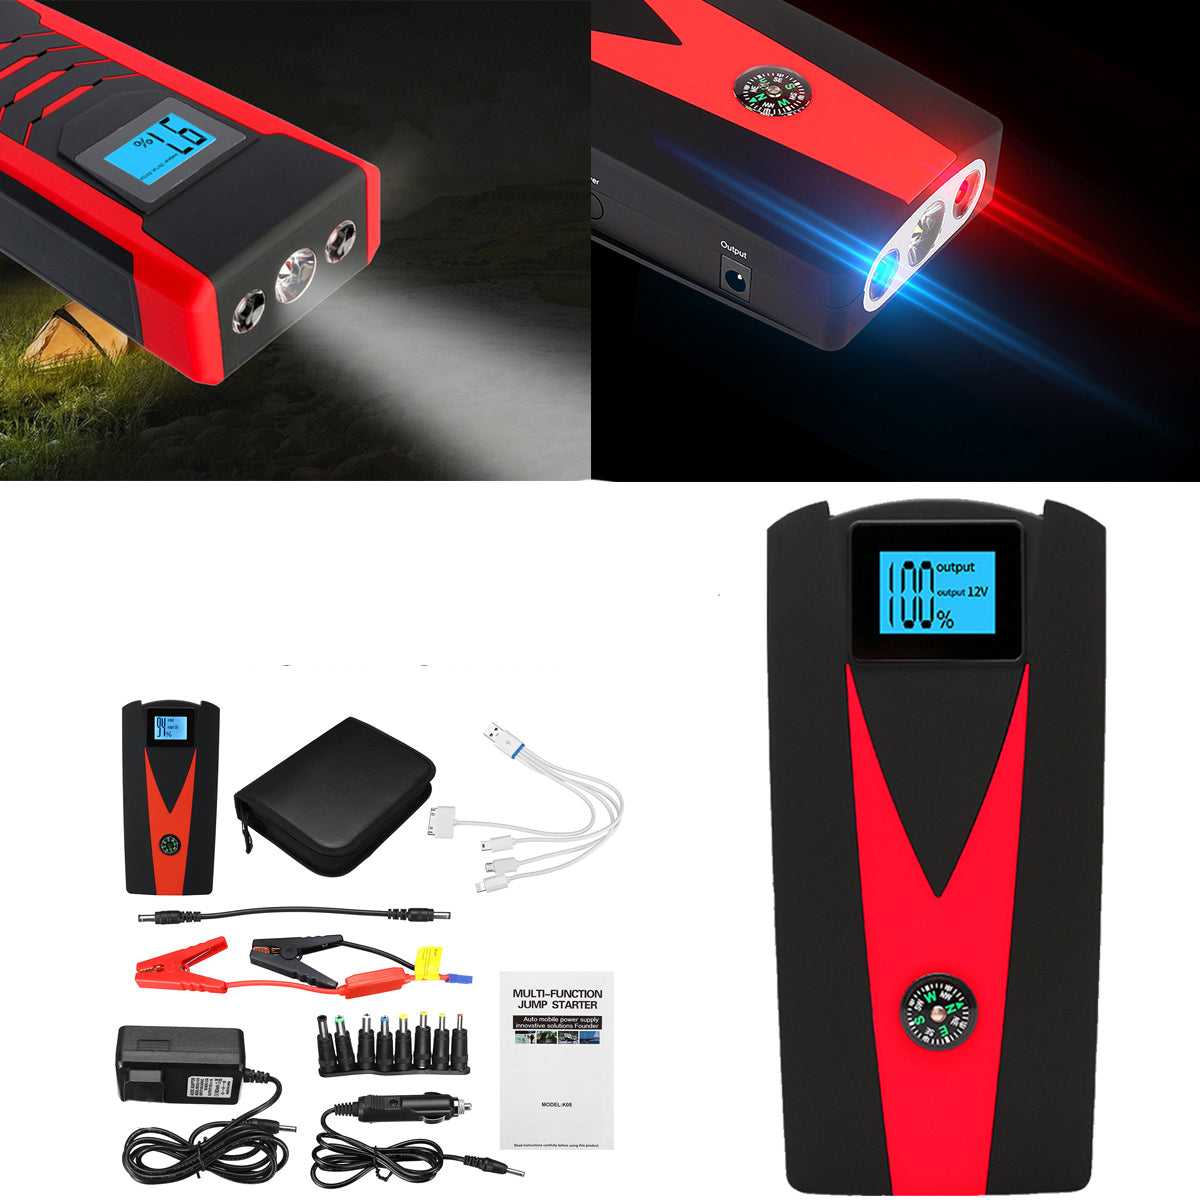 Snow 12V 99900mAh Portable Car Jump Starter Booster Power Bank 2 USB Battery Charger